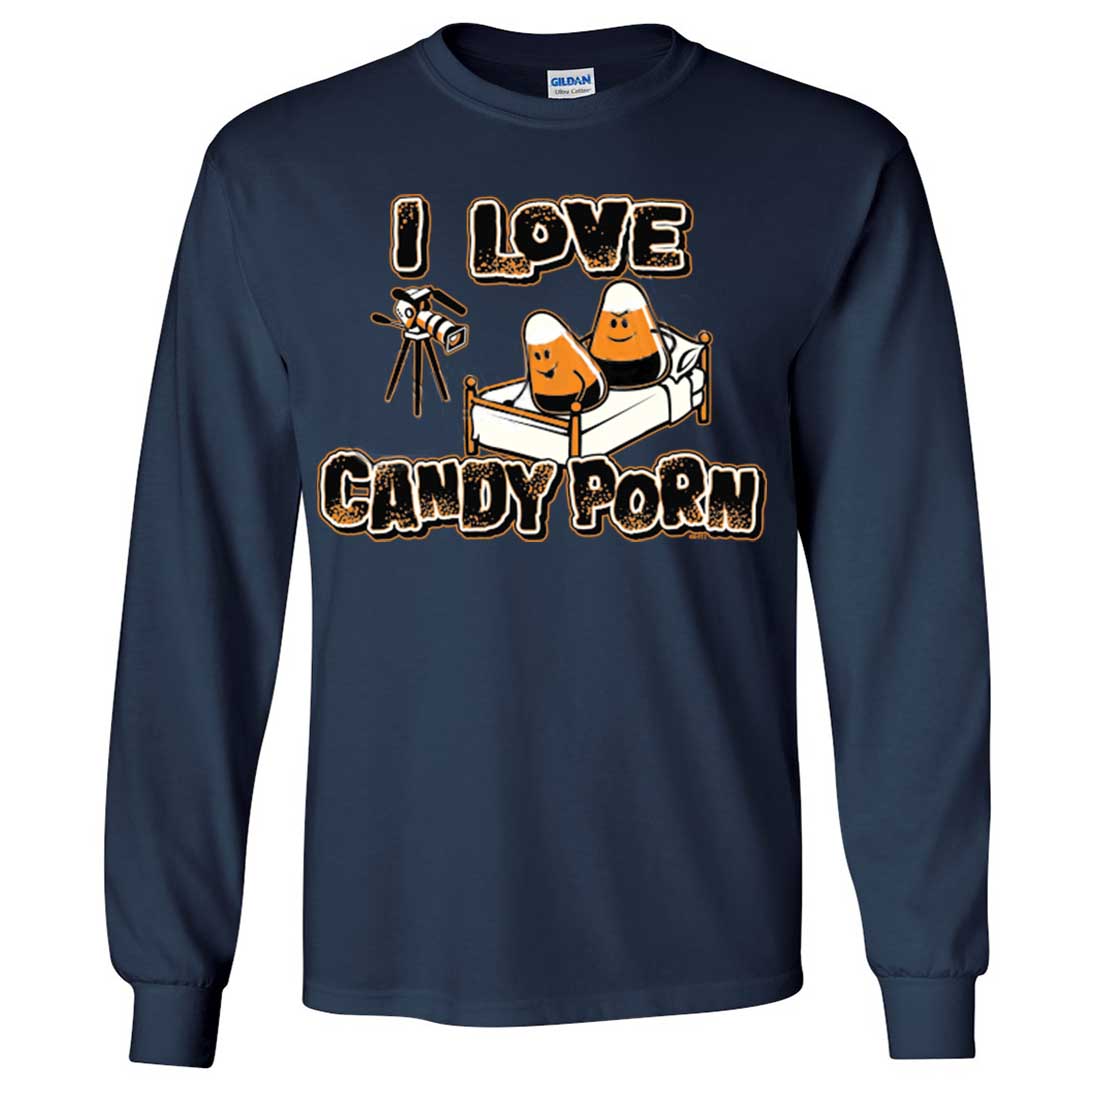 I Love Candy Porn Long Sleeve Shirt - California Republic Clothes